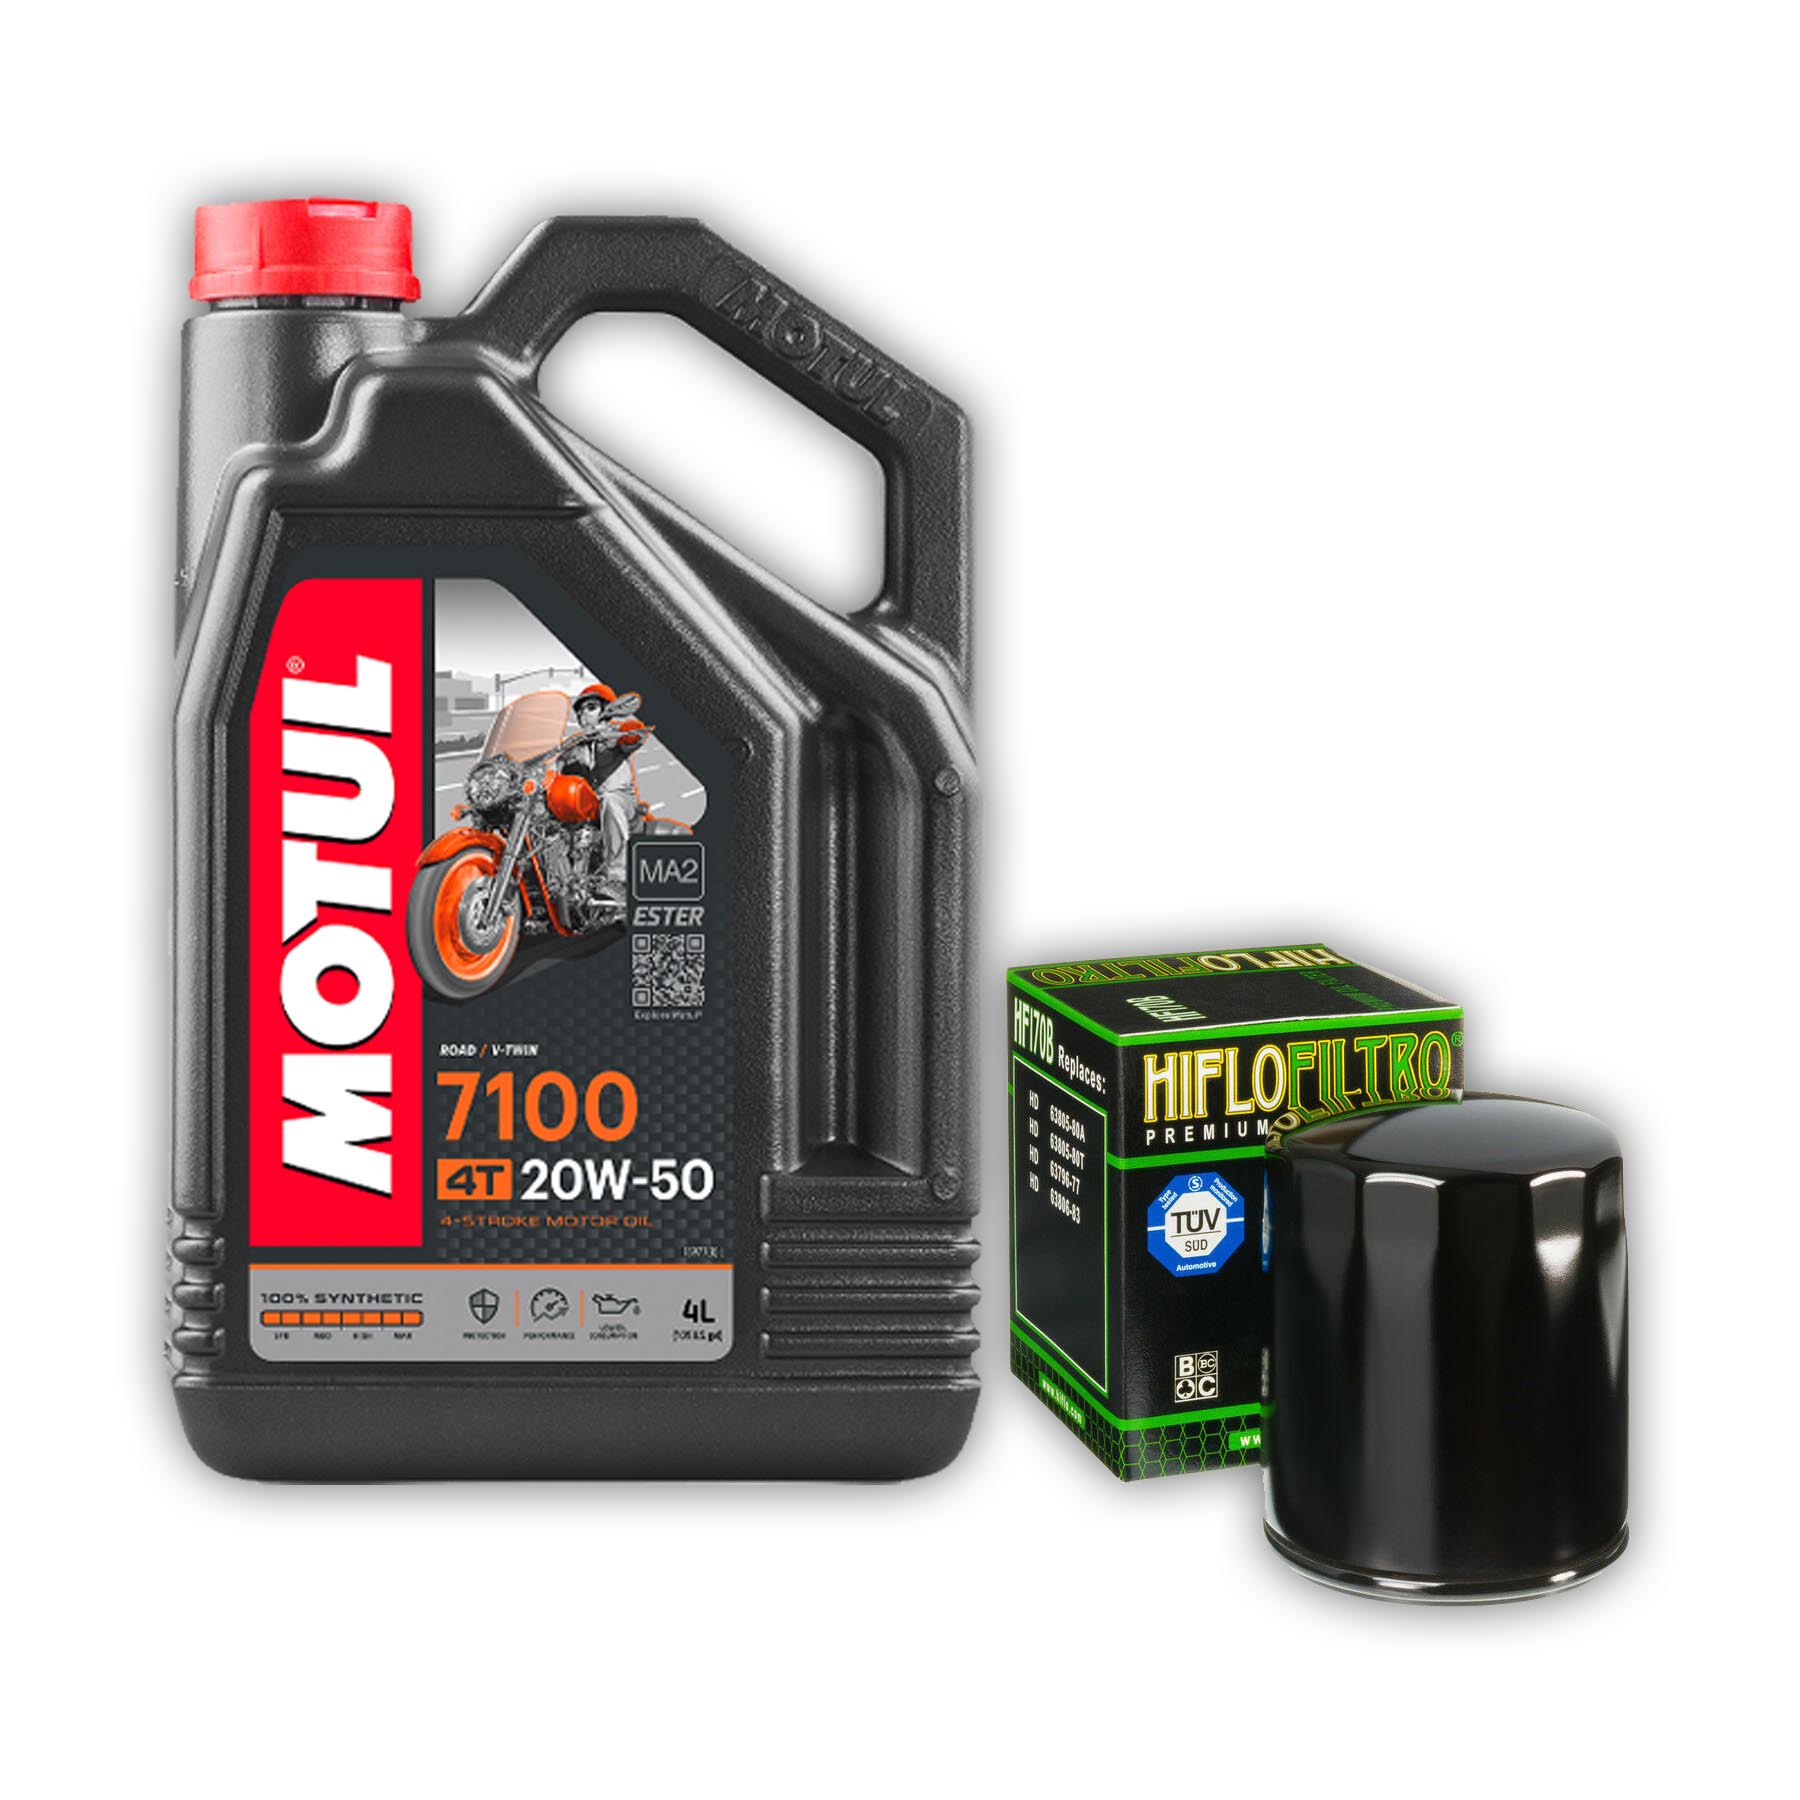 Motul Oil Change Kits - Drag Specialties - Lucky Speed Shop